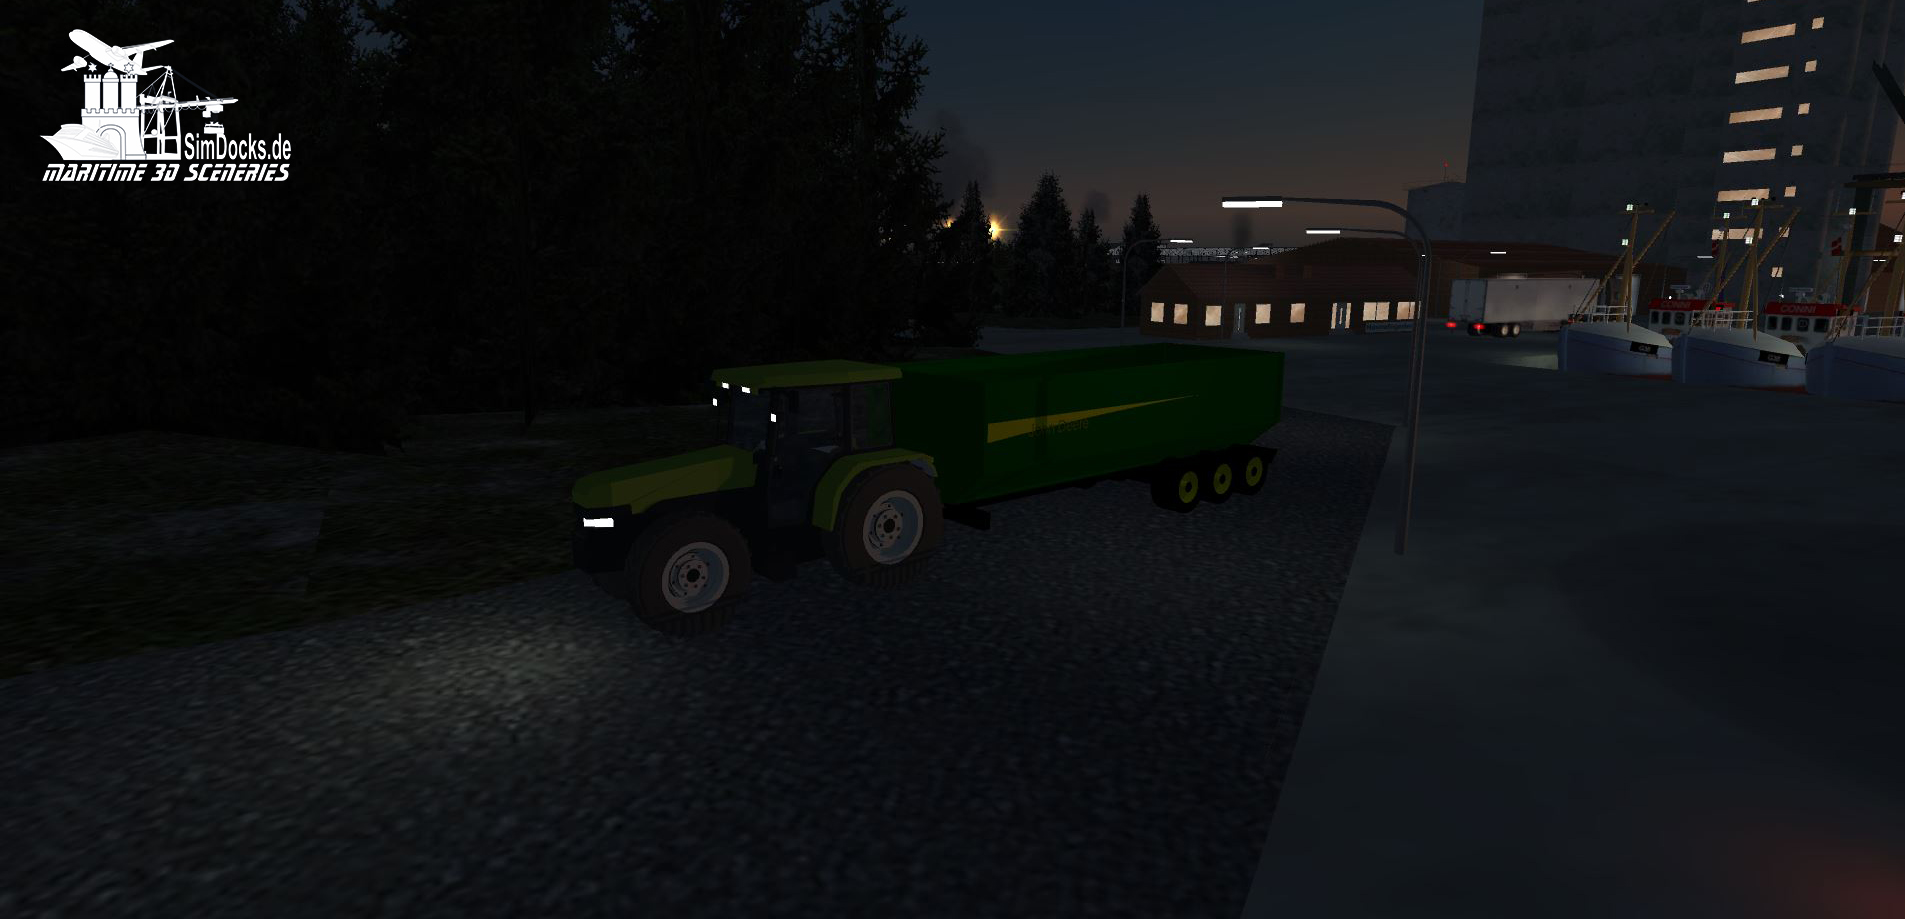 Rodby_Dynamic_Tractor_nacht.JPG